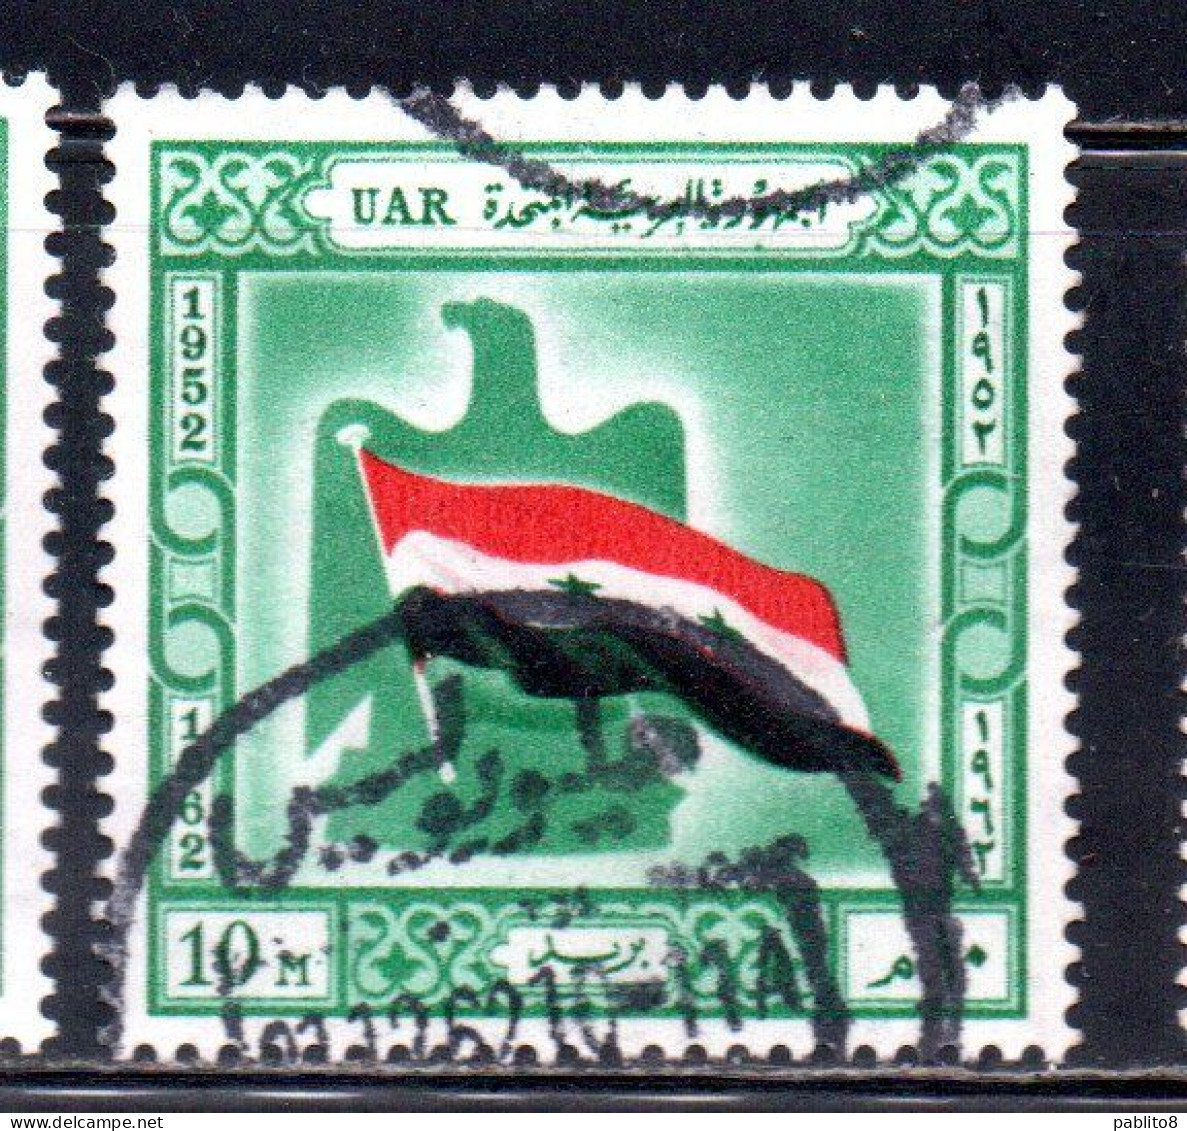 UAR EGYPT EGITTO 1962 BIRTH OF UAR FLAG AND EAGLE 10m USED USATO OBLITERE' - Usati